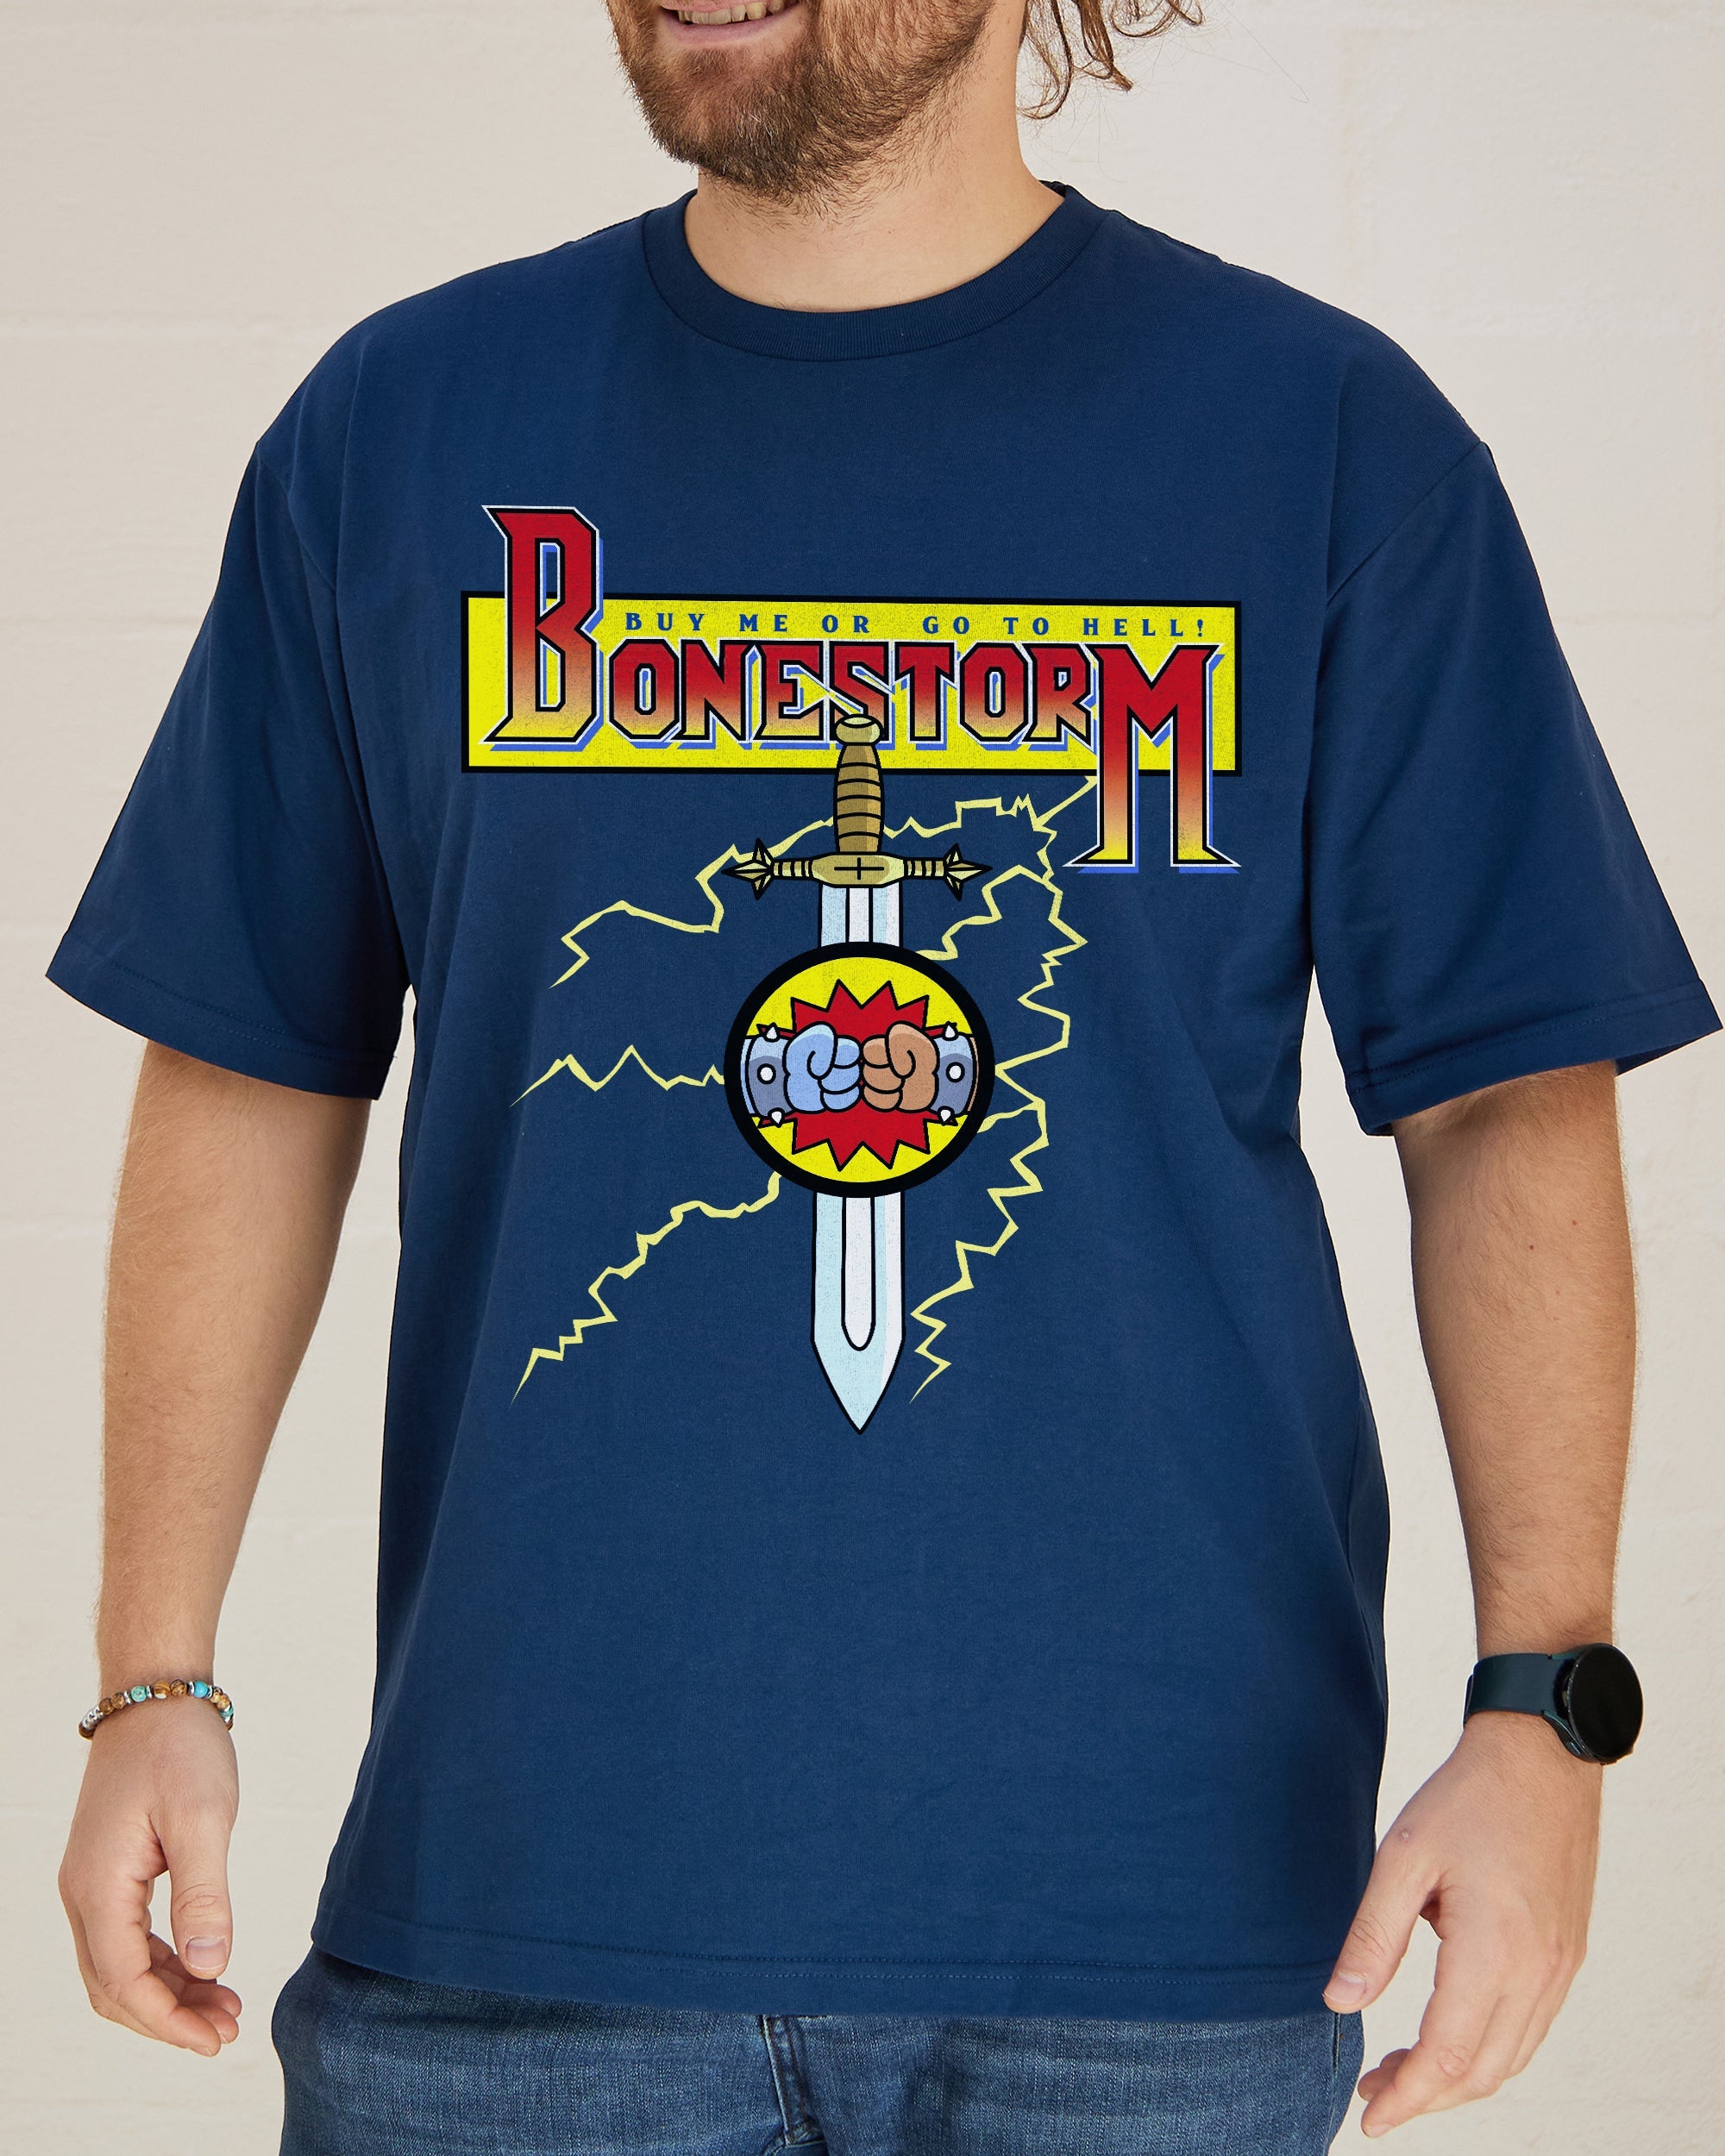 Bonestorm T-Shirt Australia Online Navy